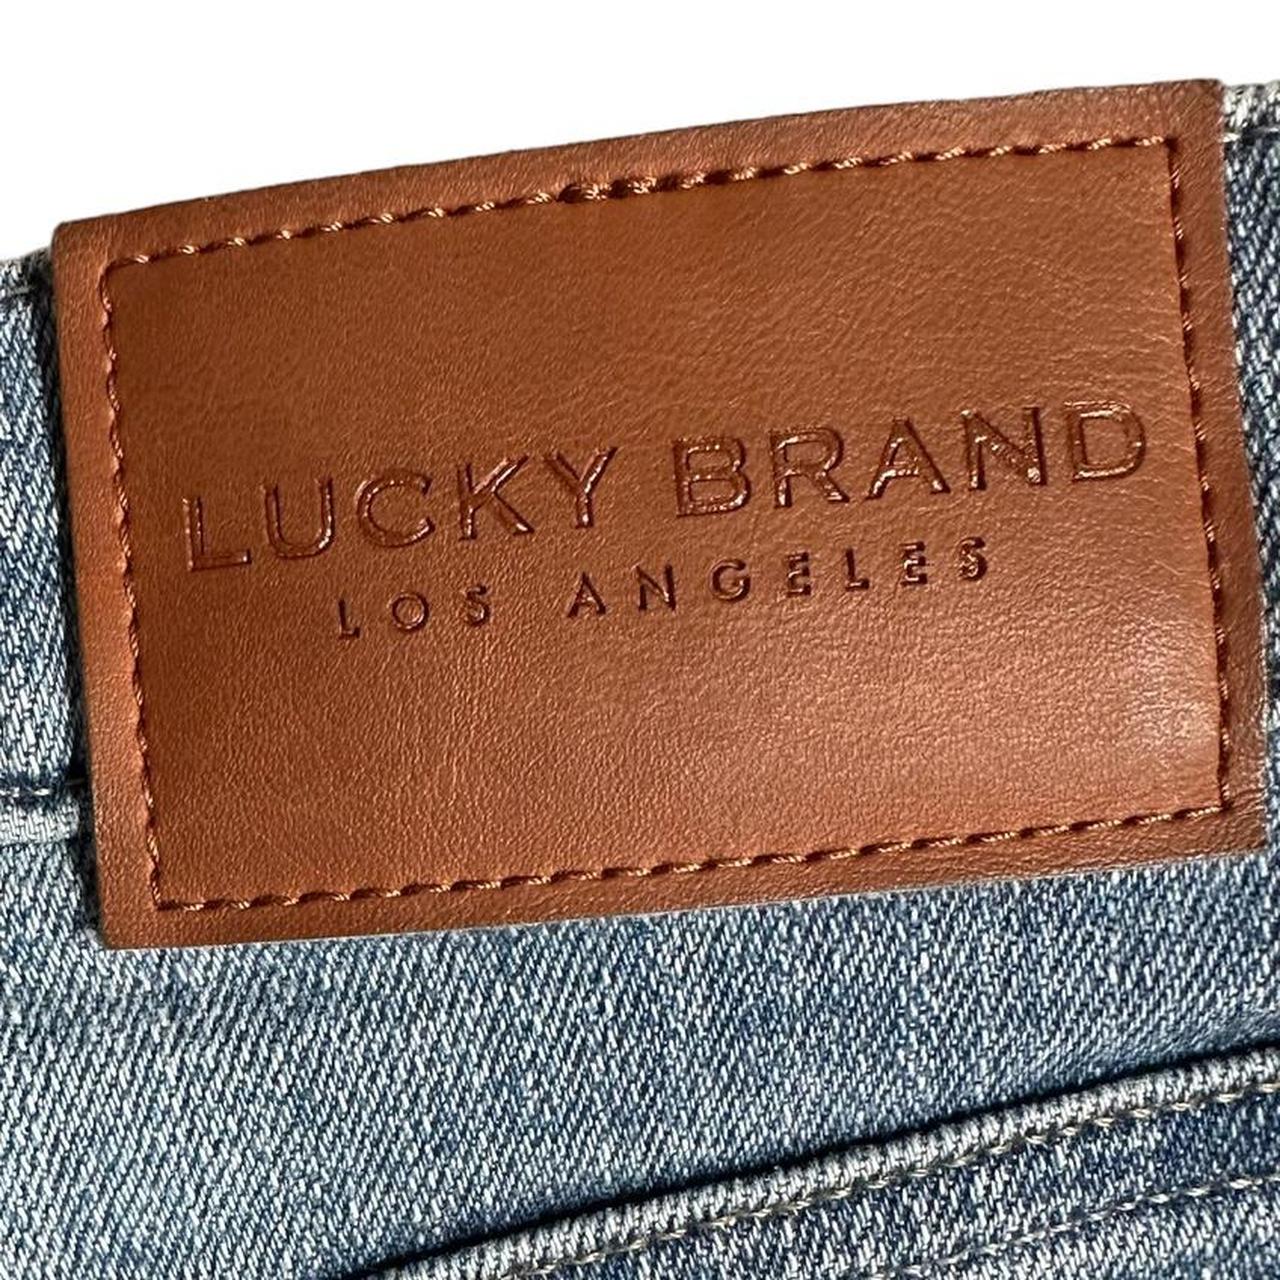 Lucky Brand skinny jean.